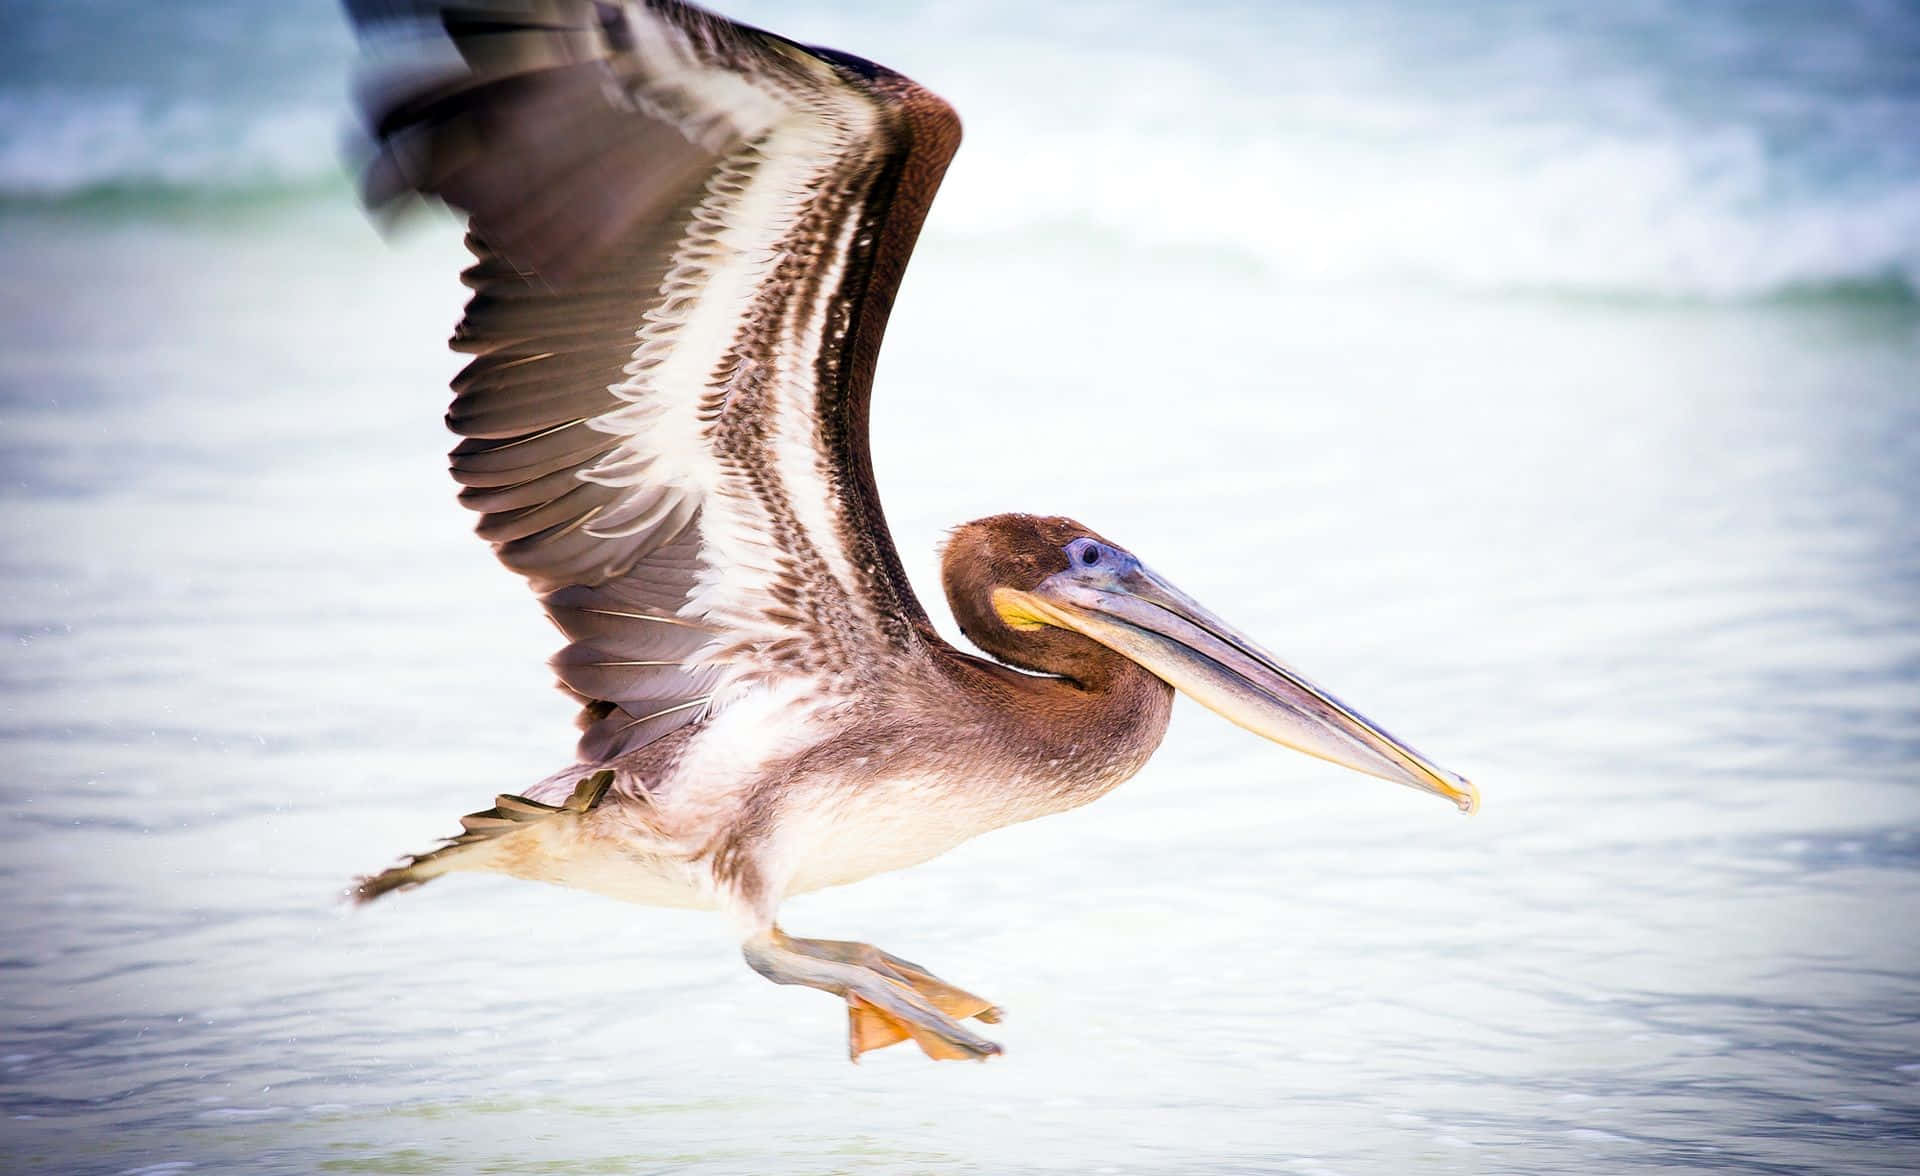 Majestic Pelicans Glide Over The Ocean